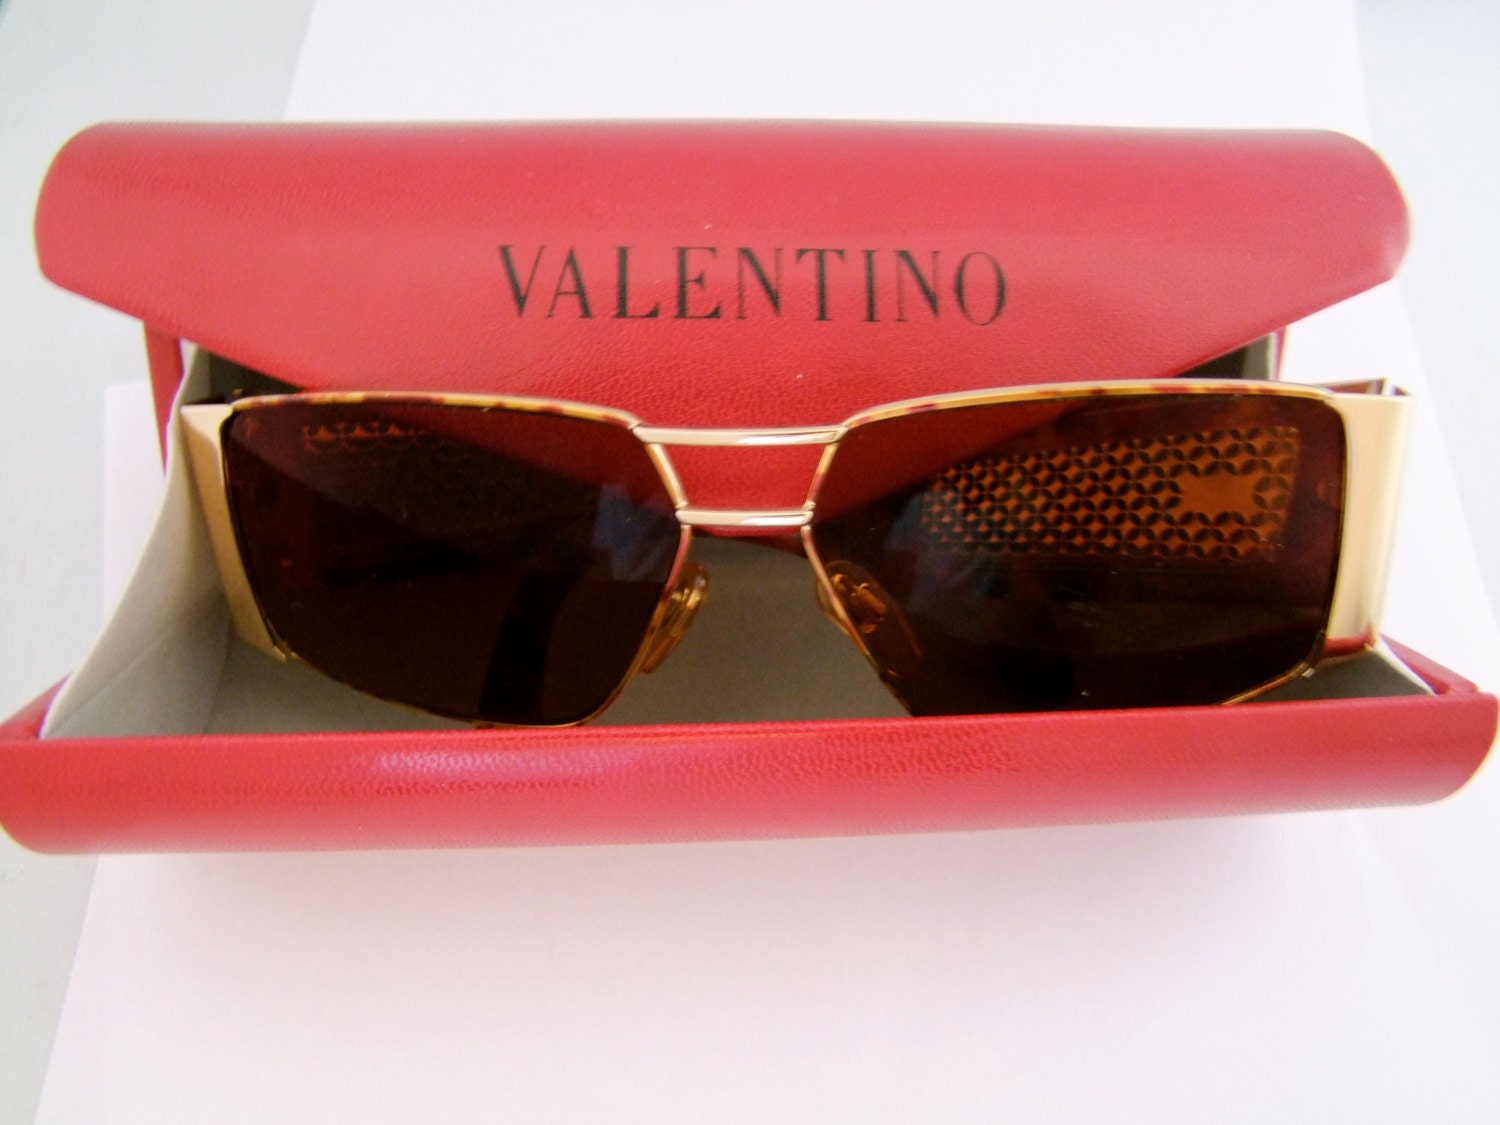 Valentino Eyeglasses 80s 90s Vintage Designer By Ifoundgallery 